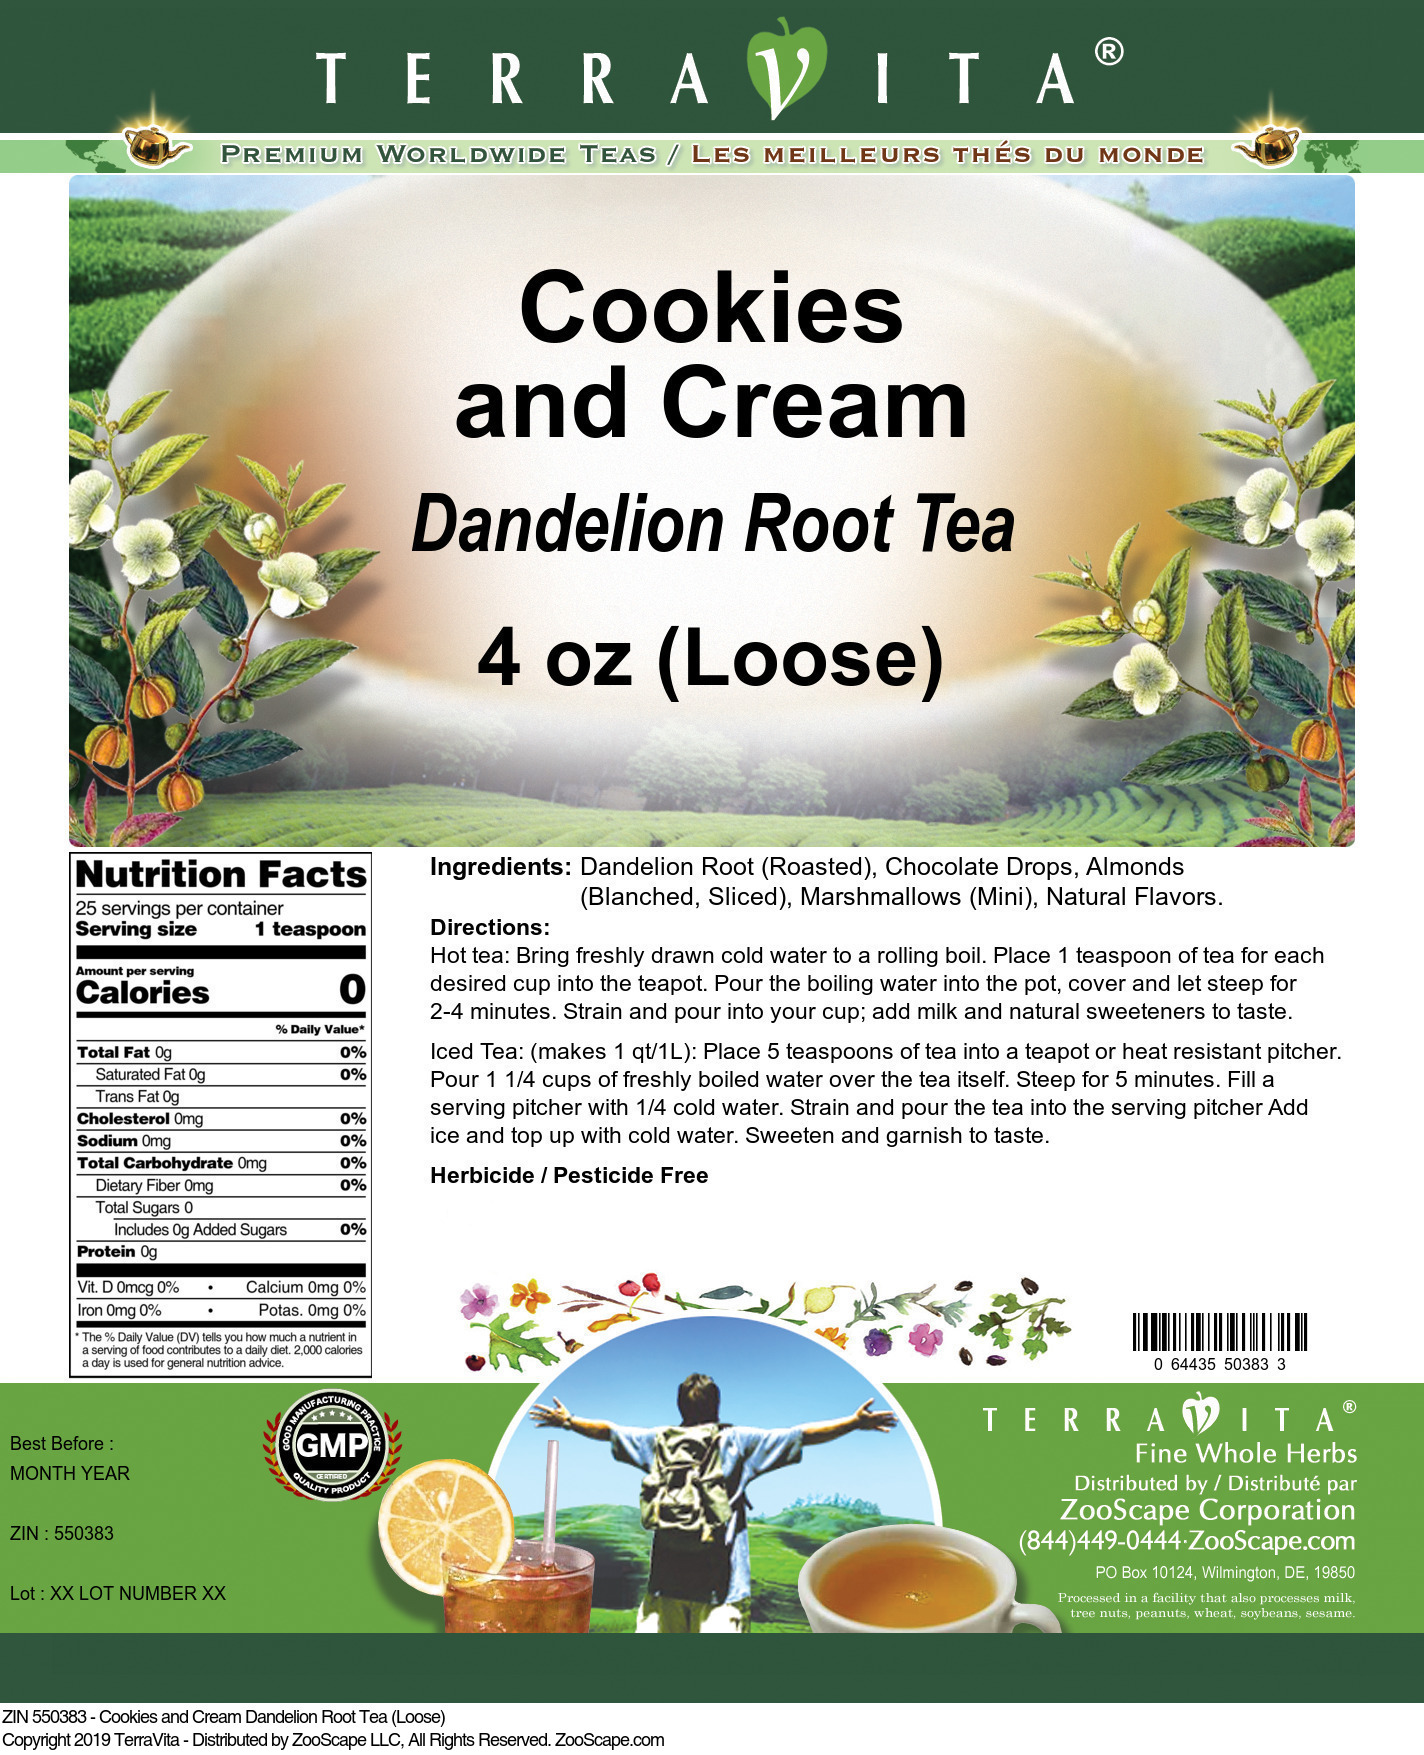 Cookies and Cream Dandelion Root Tea (Loose) - Label